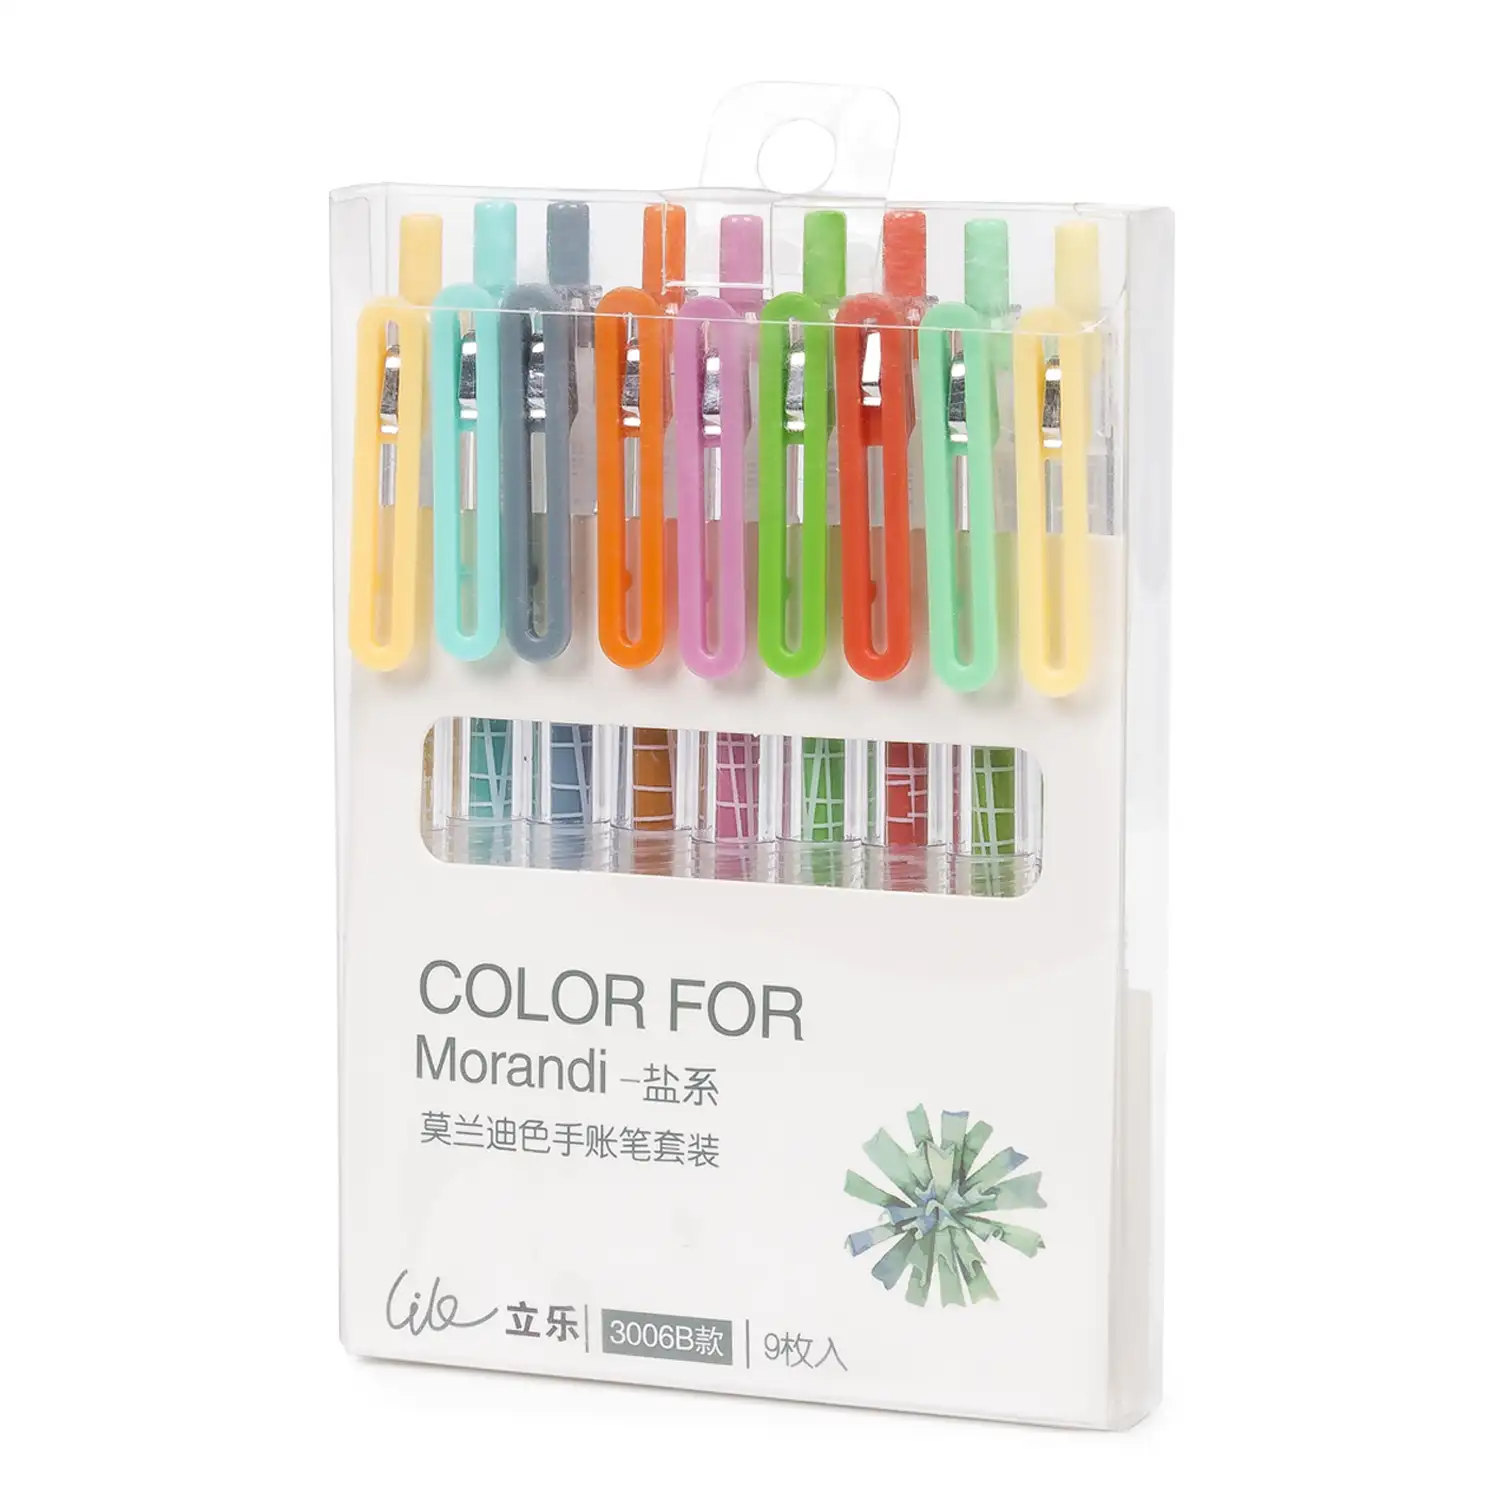 TANMIT Bolígrafos de gel, 36 bolígrafos de gel de colores y 33 bolígrafos  de purpurina de colores con un 40% más de tinta para libros de colorear  para